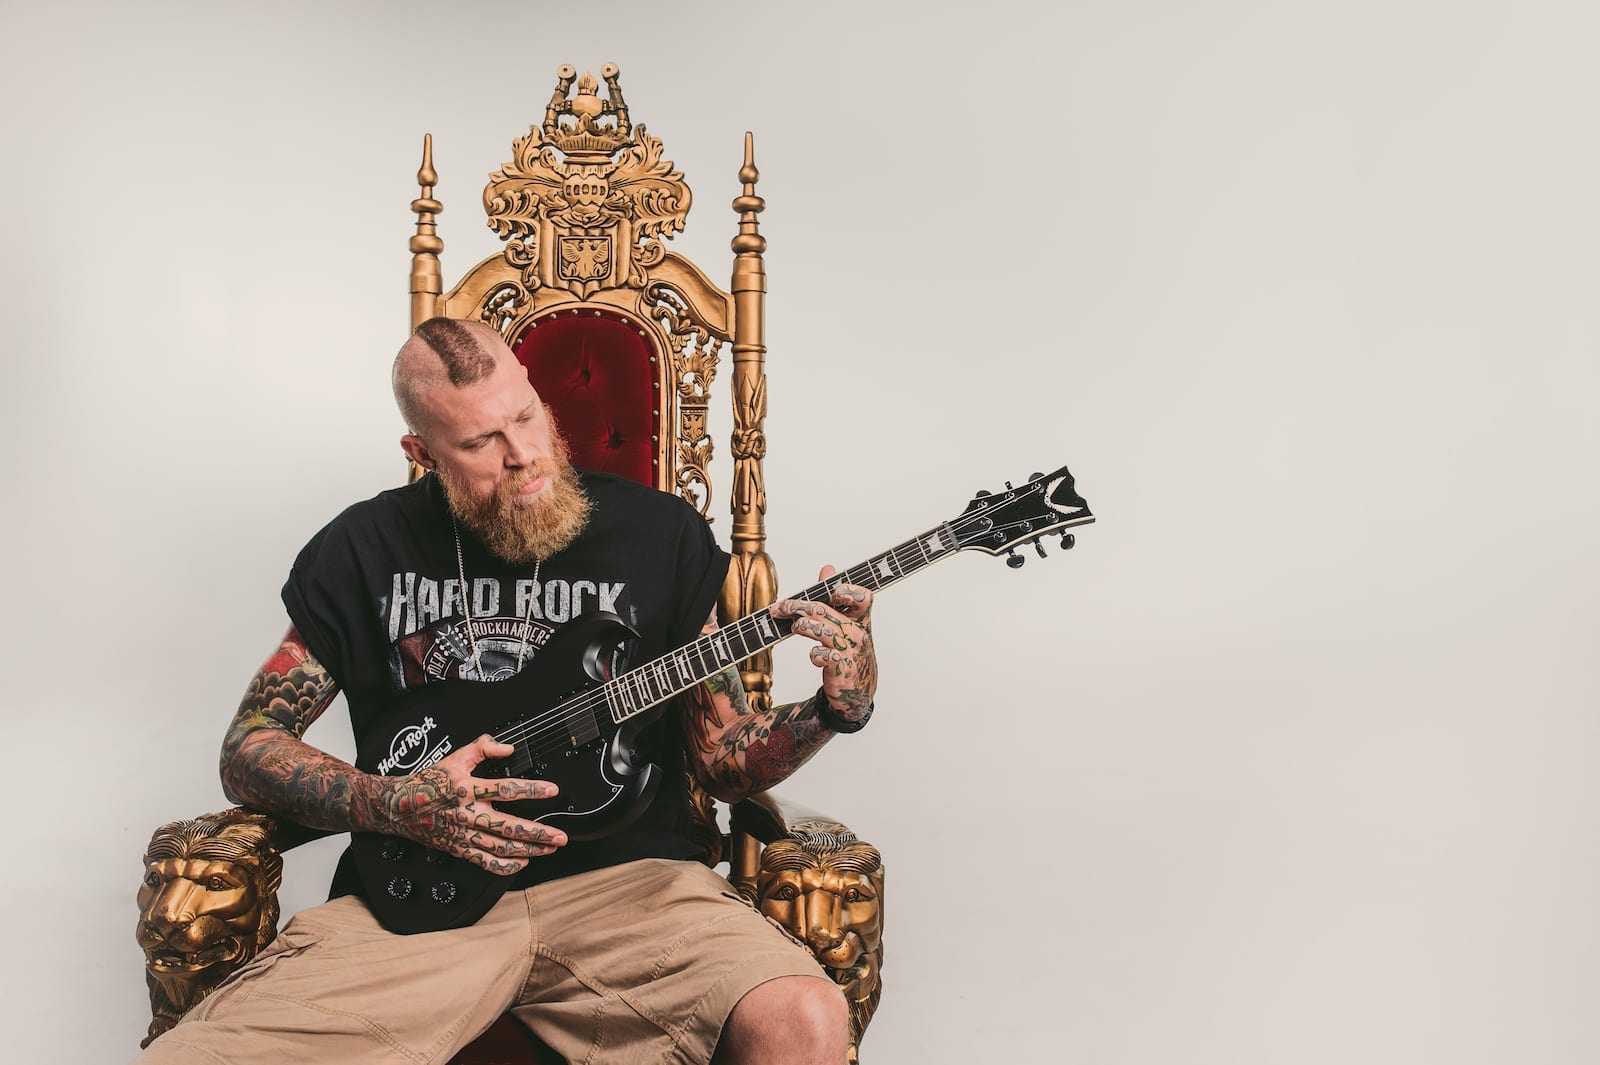 Hard Rock Energy Marketing by C&I Studios Bearded tattooed man playing a guitar on a throne posing for camera wearing a black Hard Rock tshirt